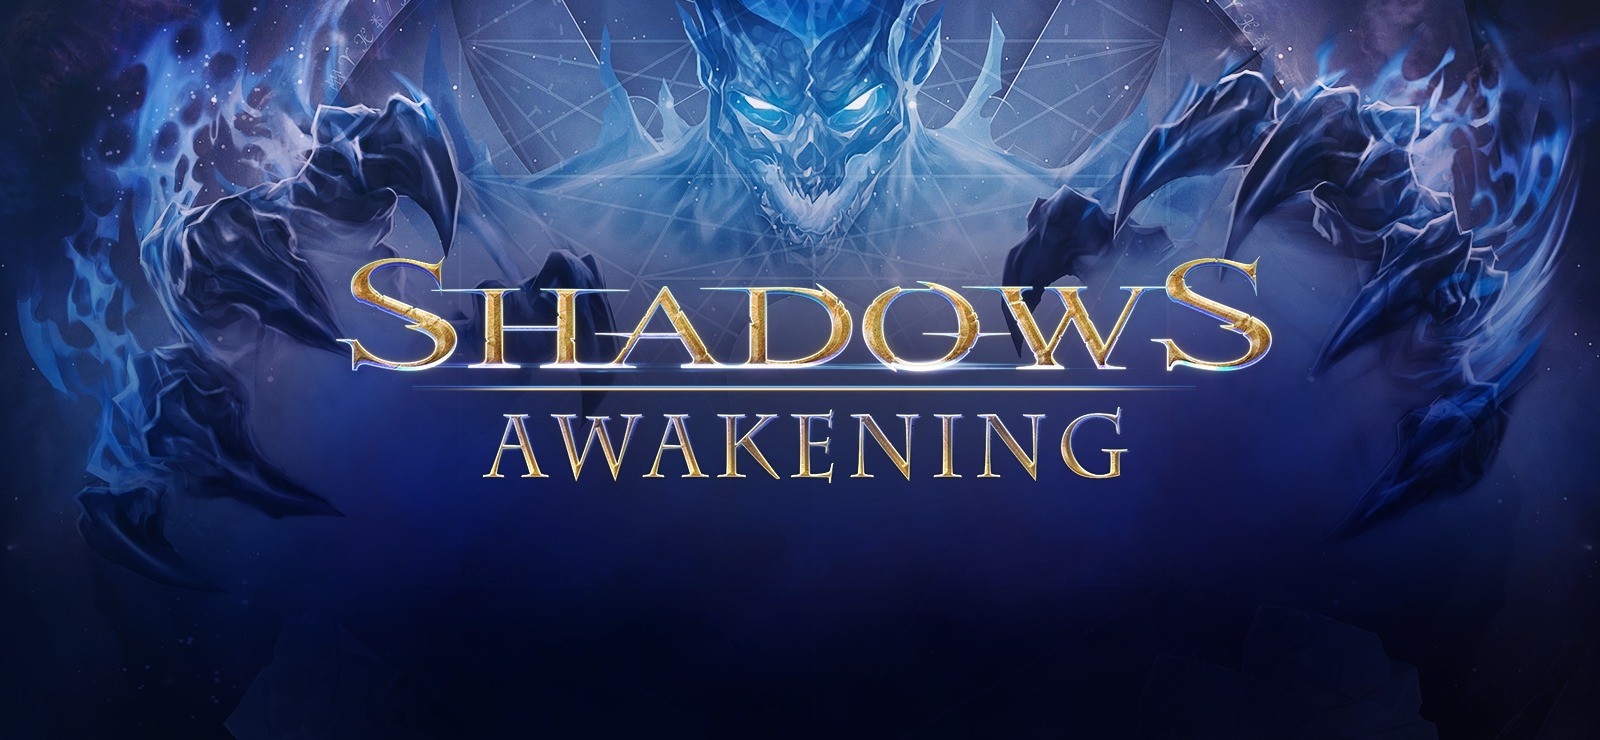 Shadows: Awakening Review - Good Old Grind